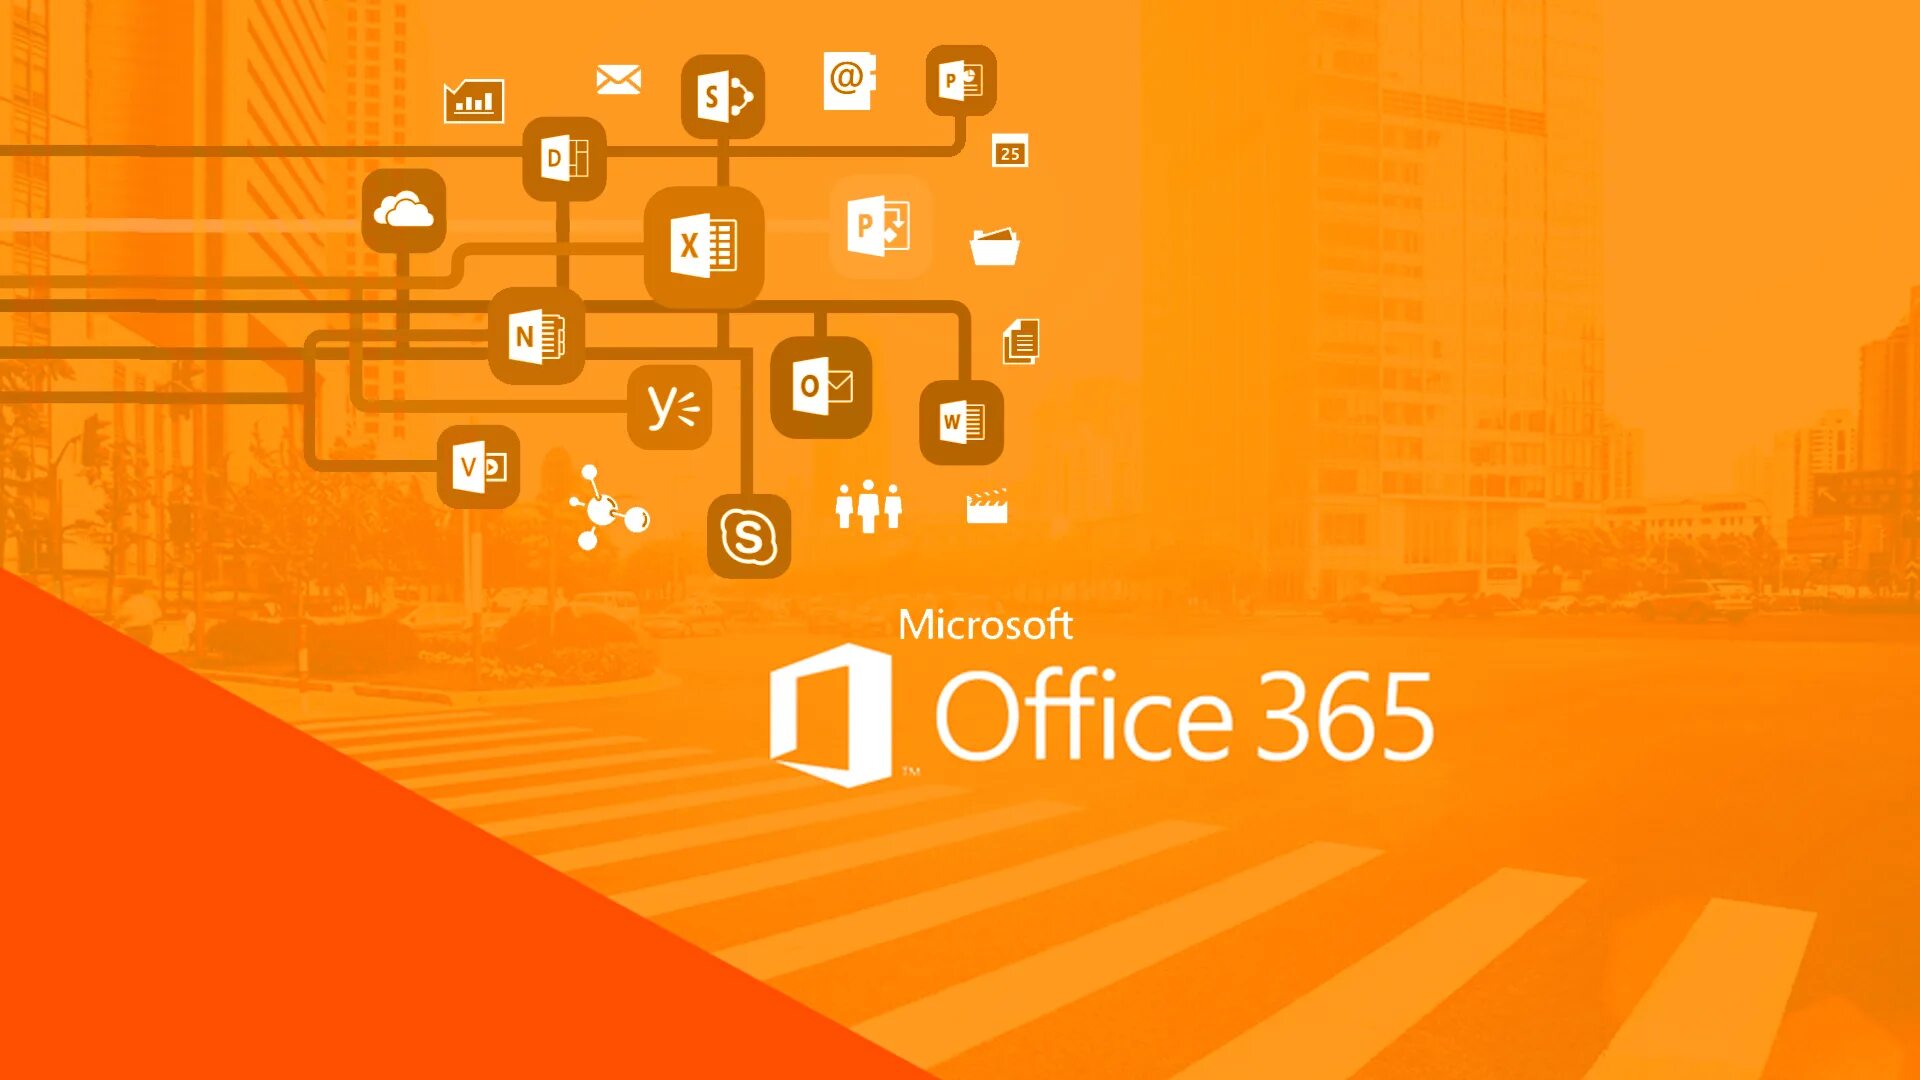 Microsoft download tool 365. Office 365. Microsoft Office 365. Office 365 последняя версия. Офис Microsoft.